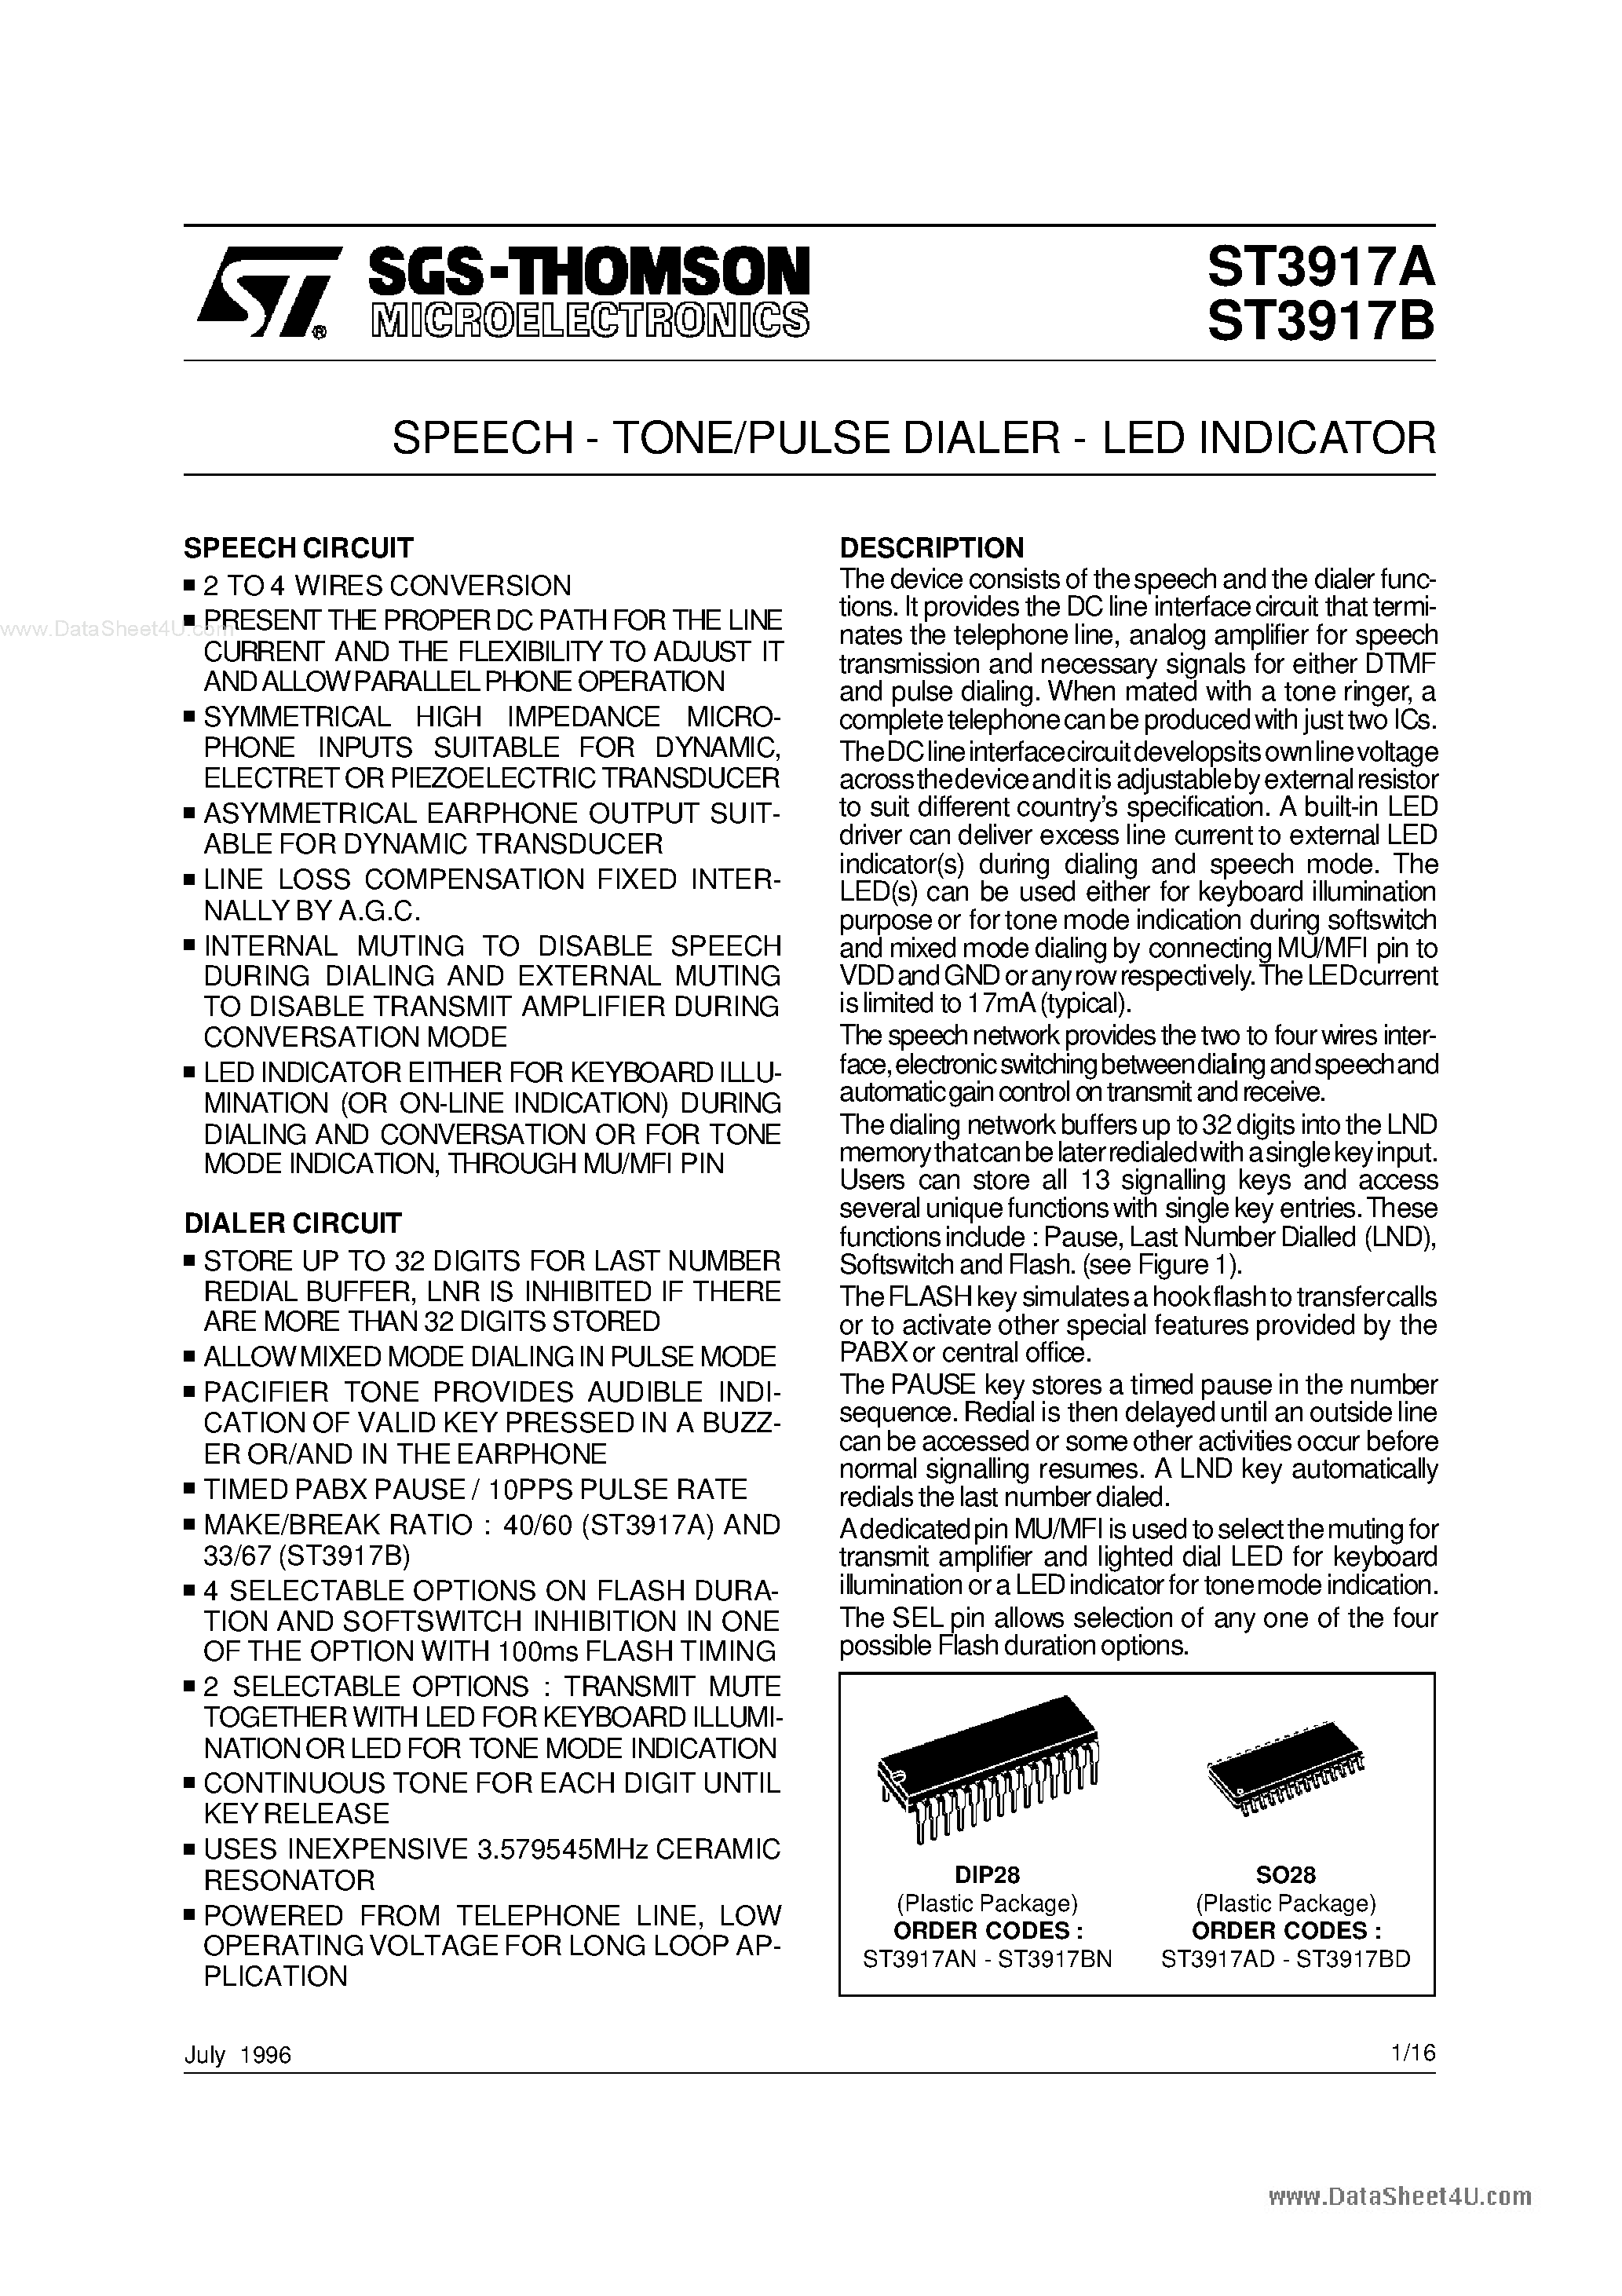 Даташит ST3938A - SPEECH - TONE/PULSE DIALER - LED INDICATOR страница 1